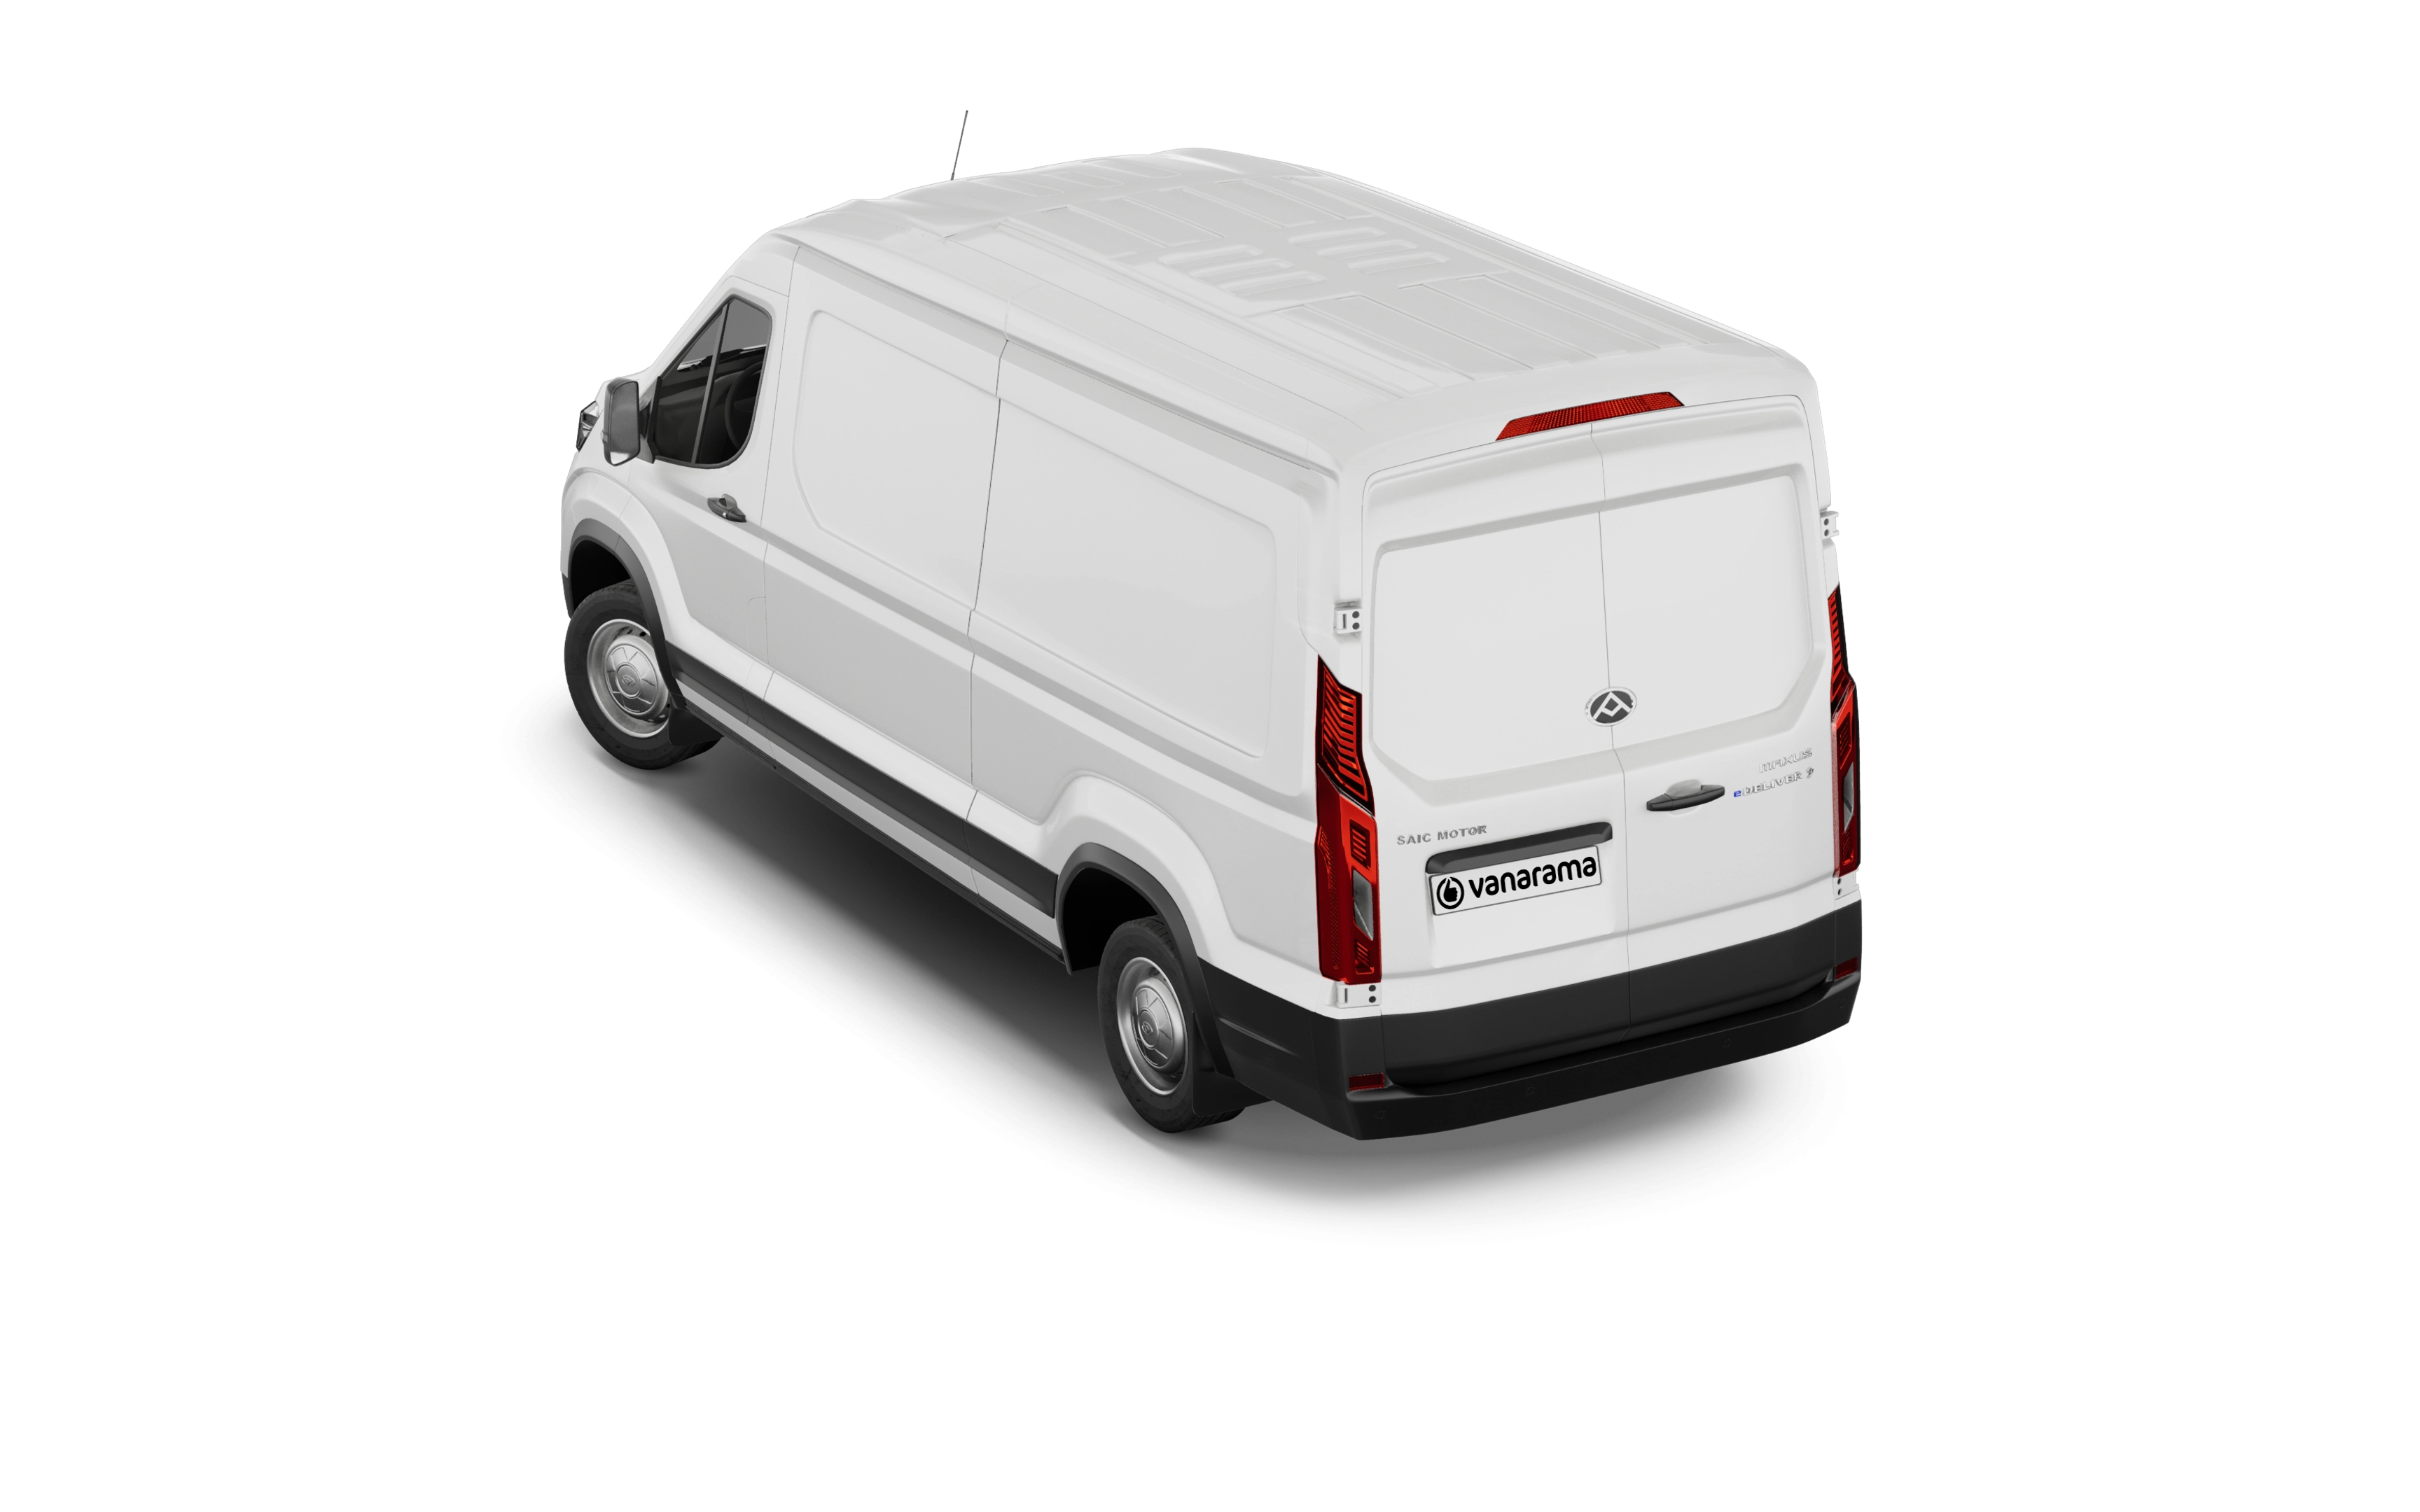 Maxus deliver 9 lwb fwd 2.0 d20 150 extra high roof van